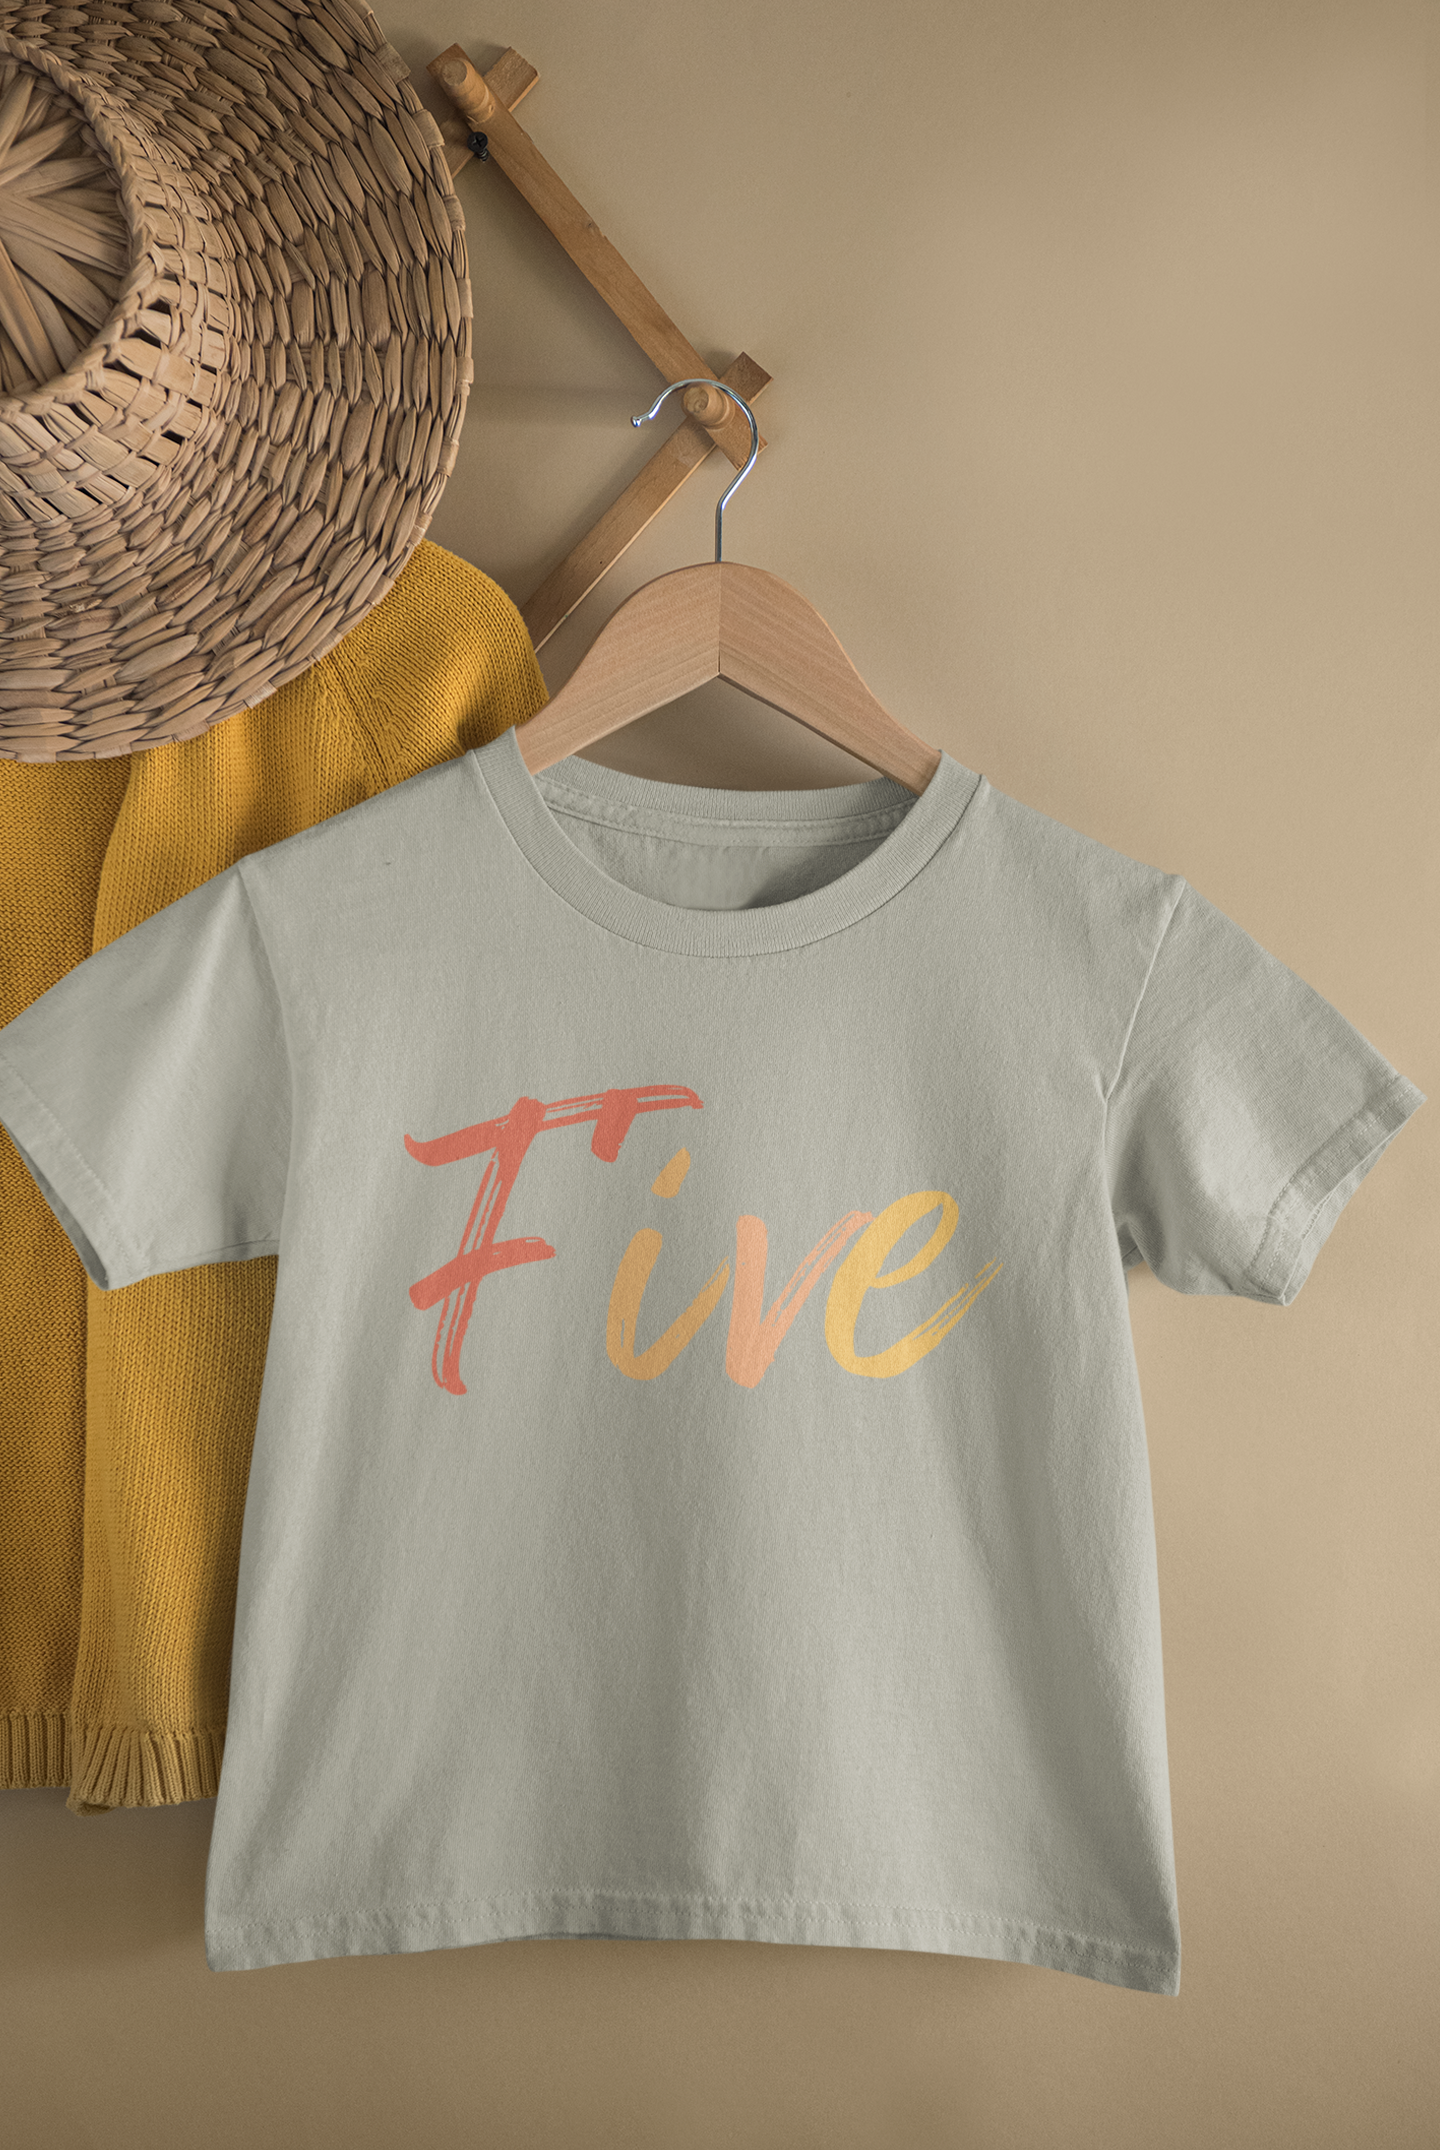 Five Years Old , Funny Shirt, for Kids, Kindergarten Shirt, Gift for Kids, Birthday Shirt